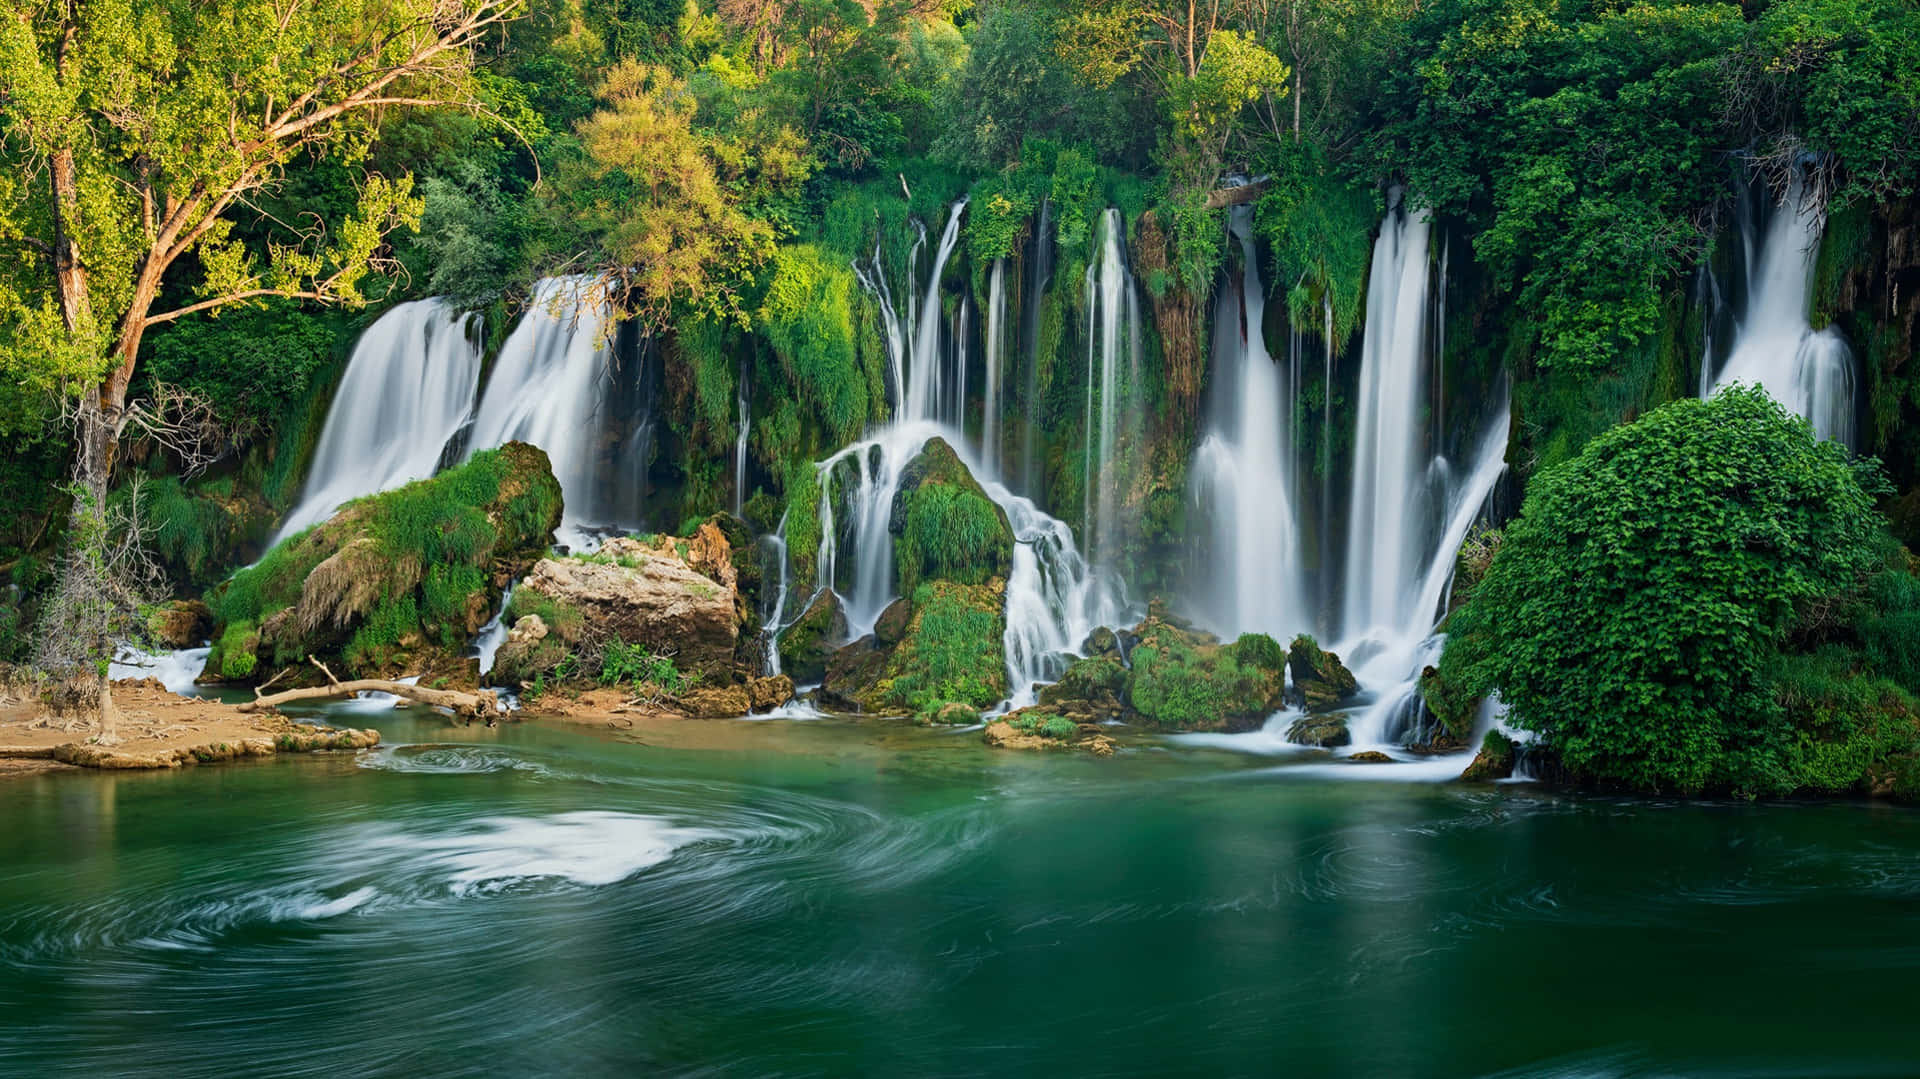 A hidden paradise - a tropical green jungle with a stunning waterfall.